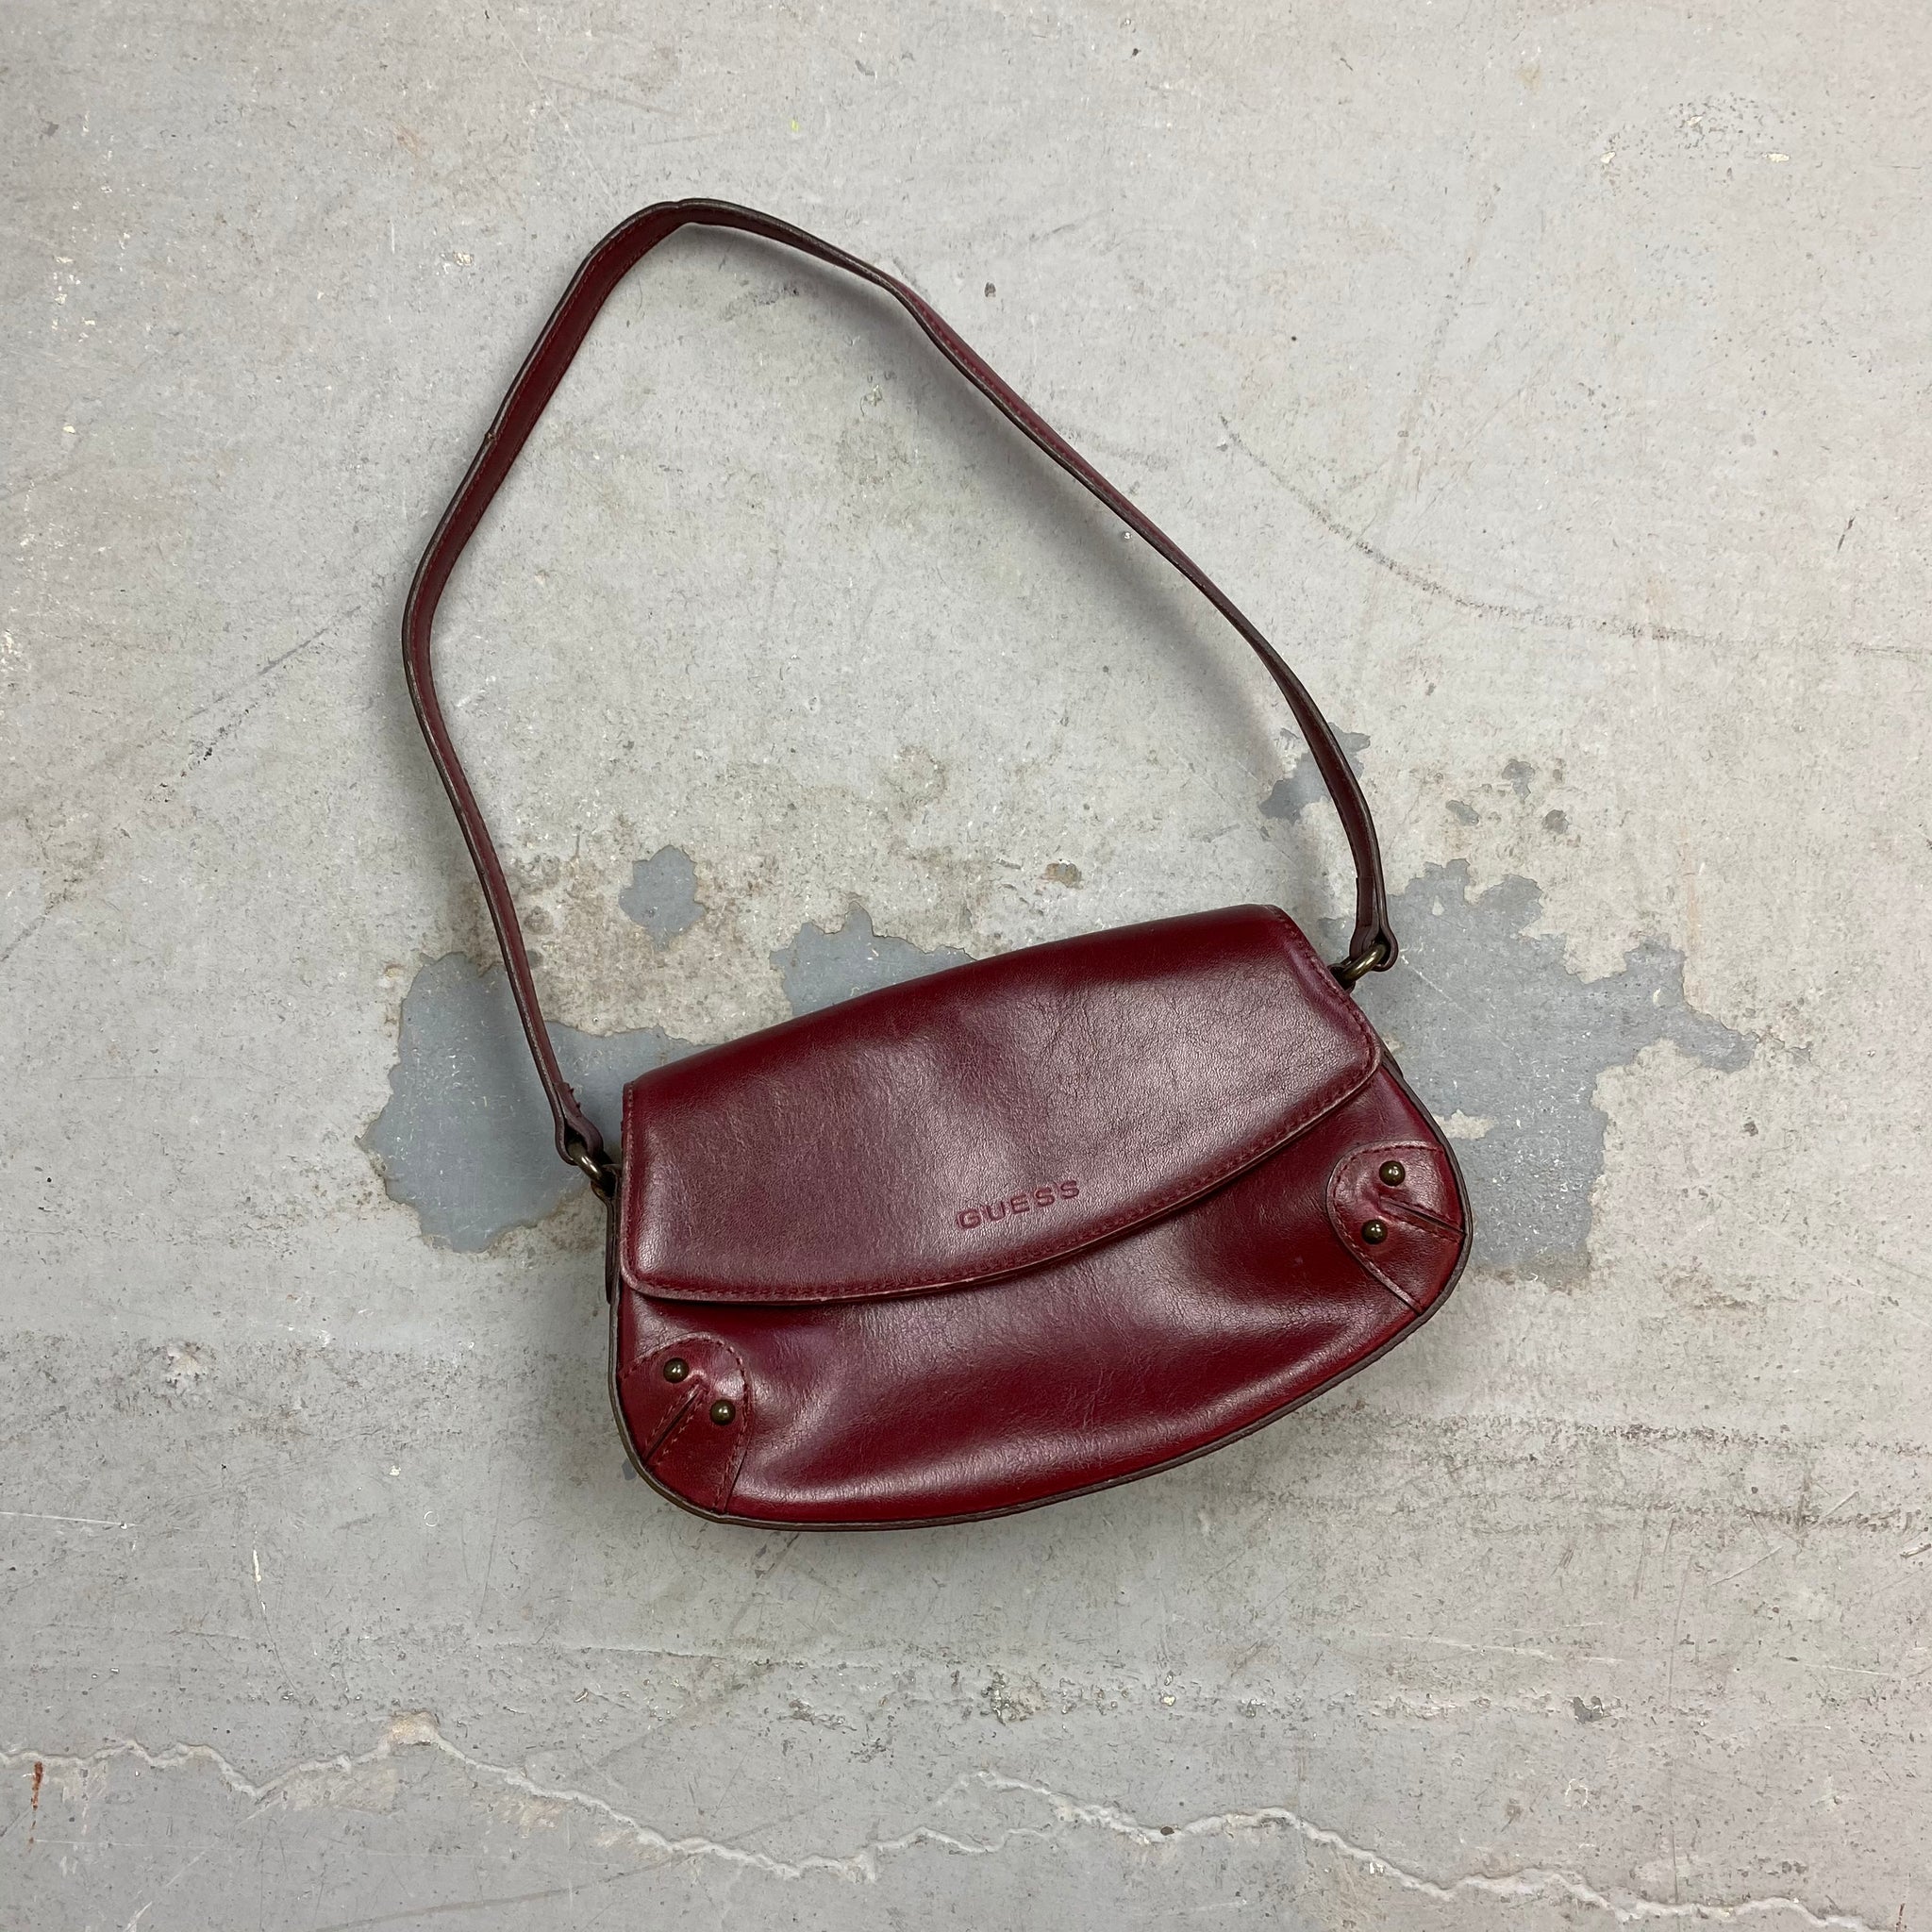 Guess Logo Handbag Black Large Purse Tote Handbag | eBay